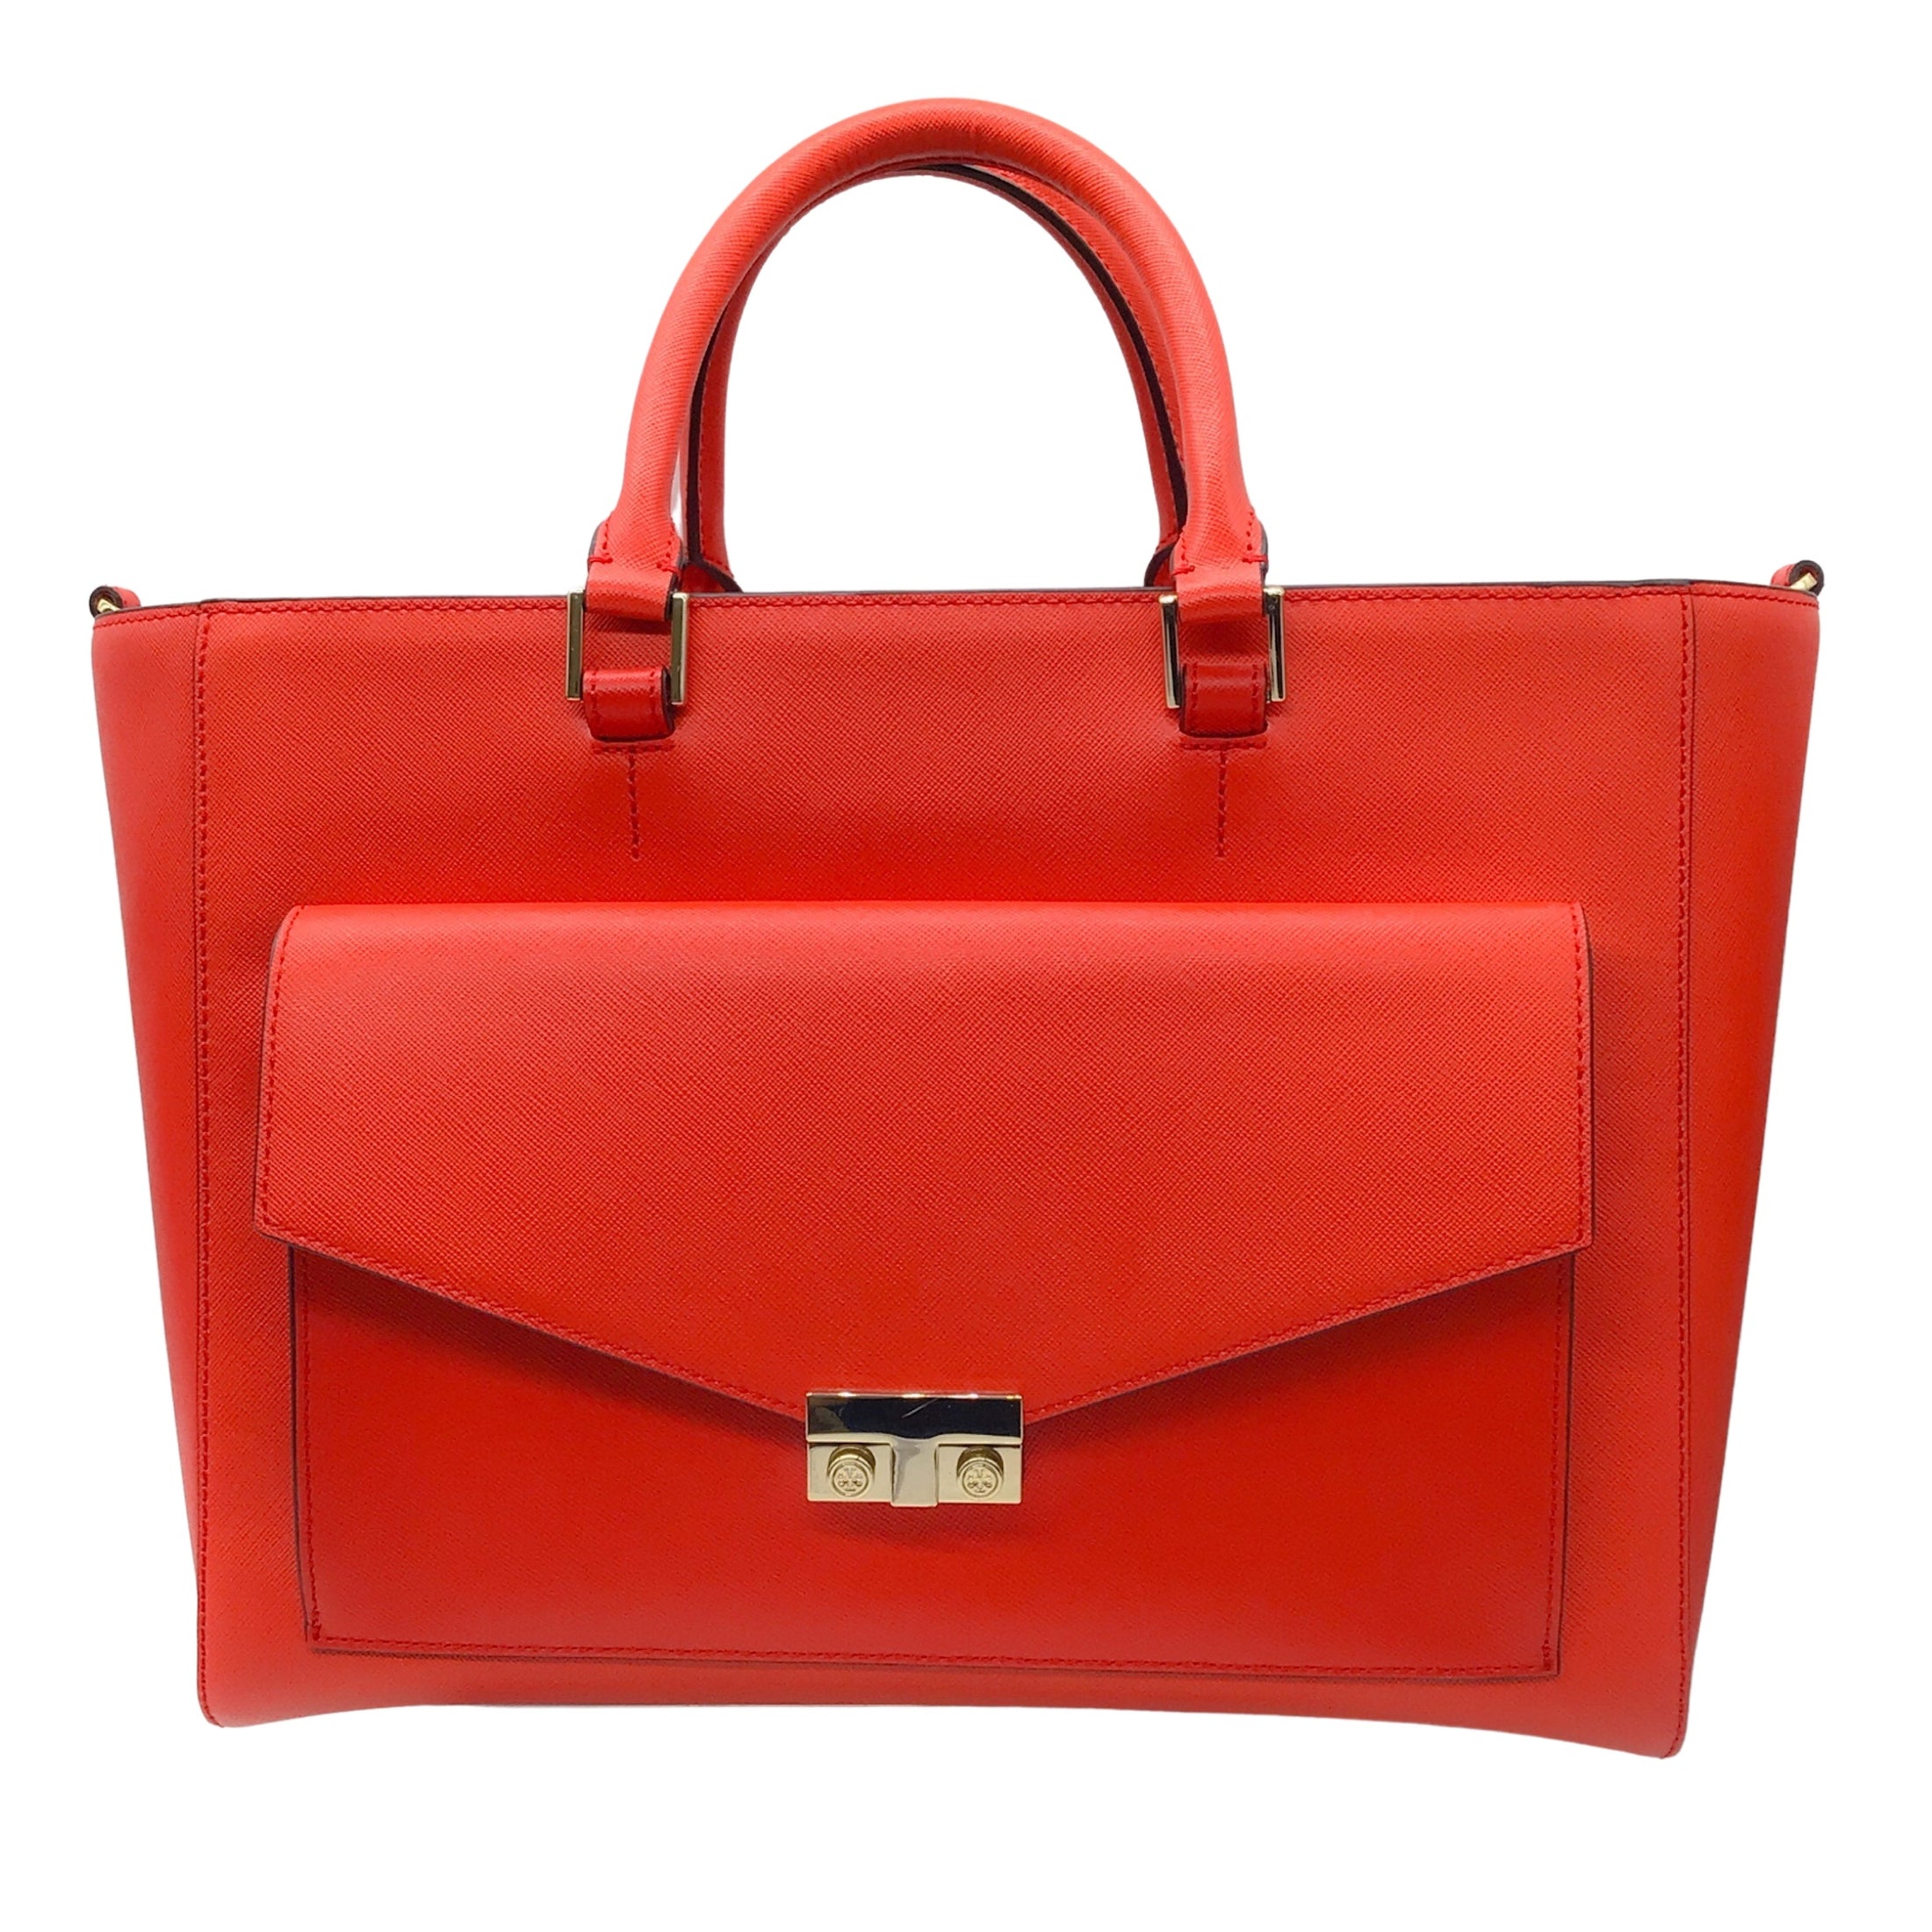 Tory Burch Masaai Red Saffiano Leather T Lock Handbag